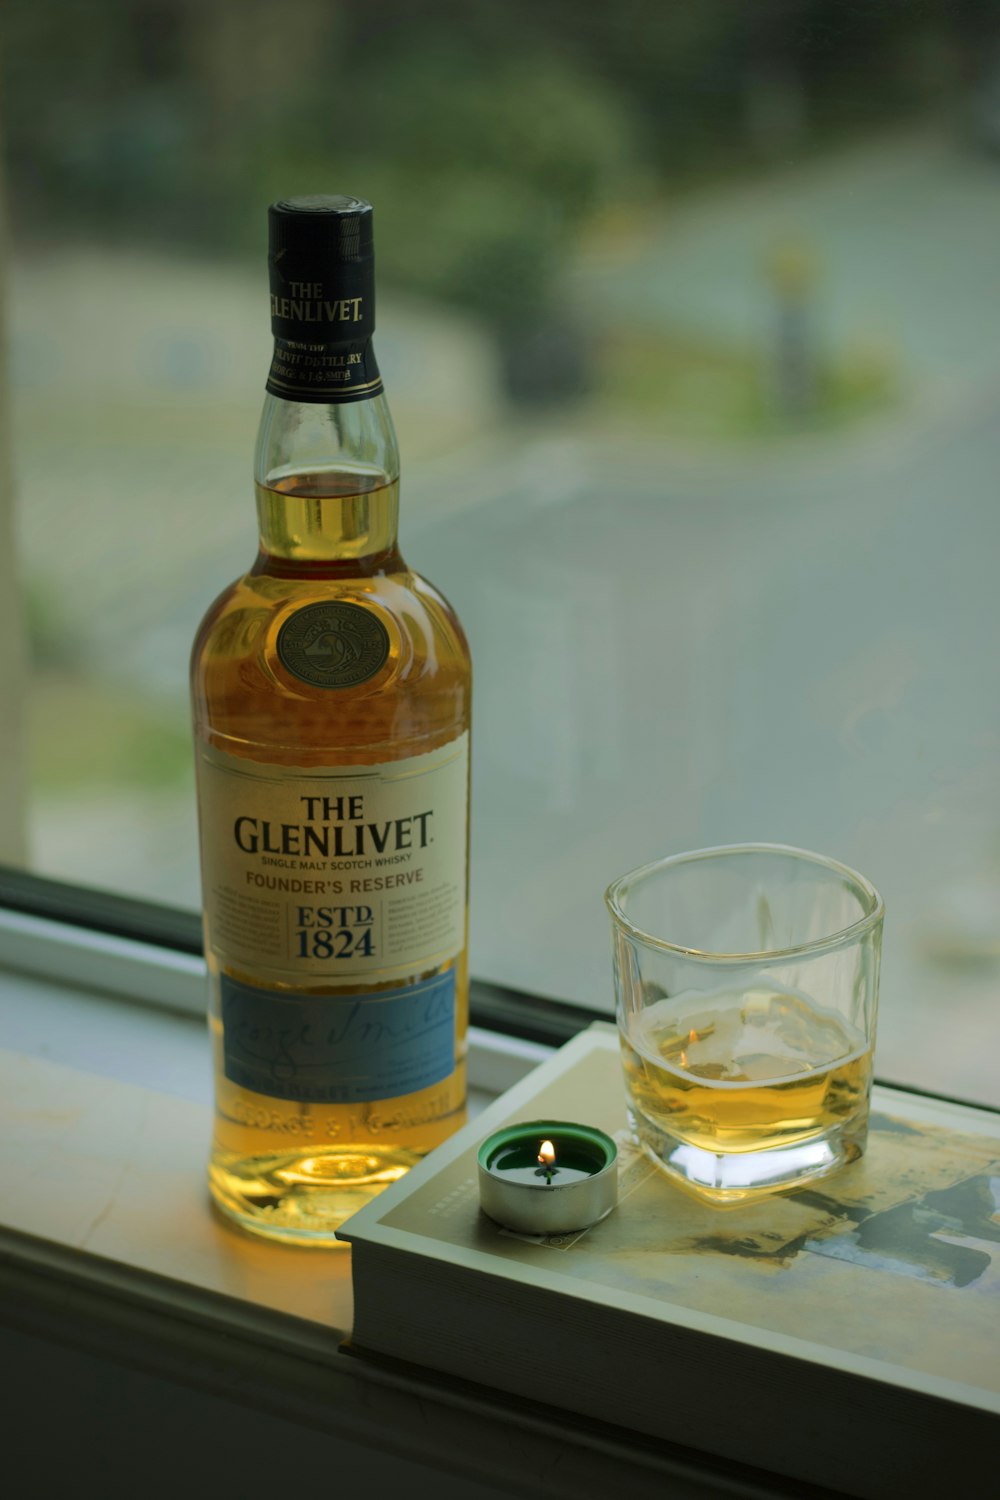 The Glenlivet bottle